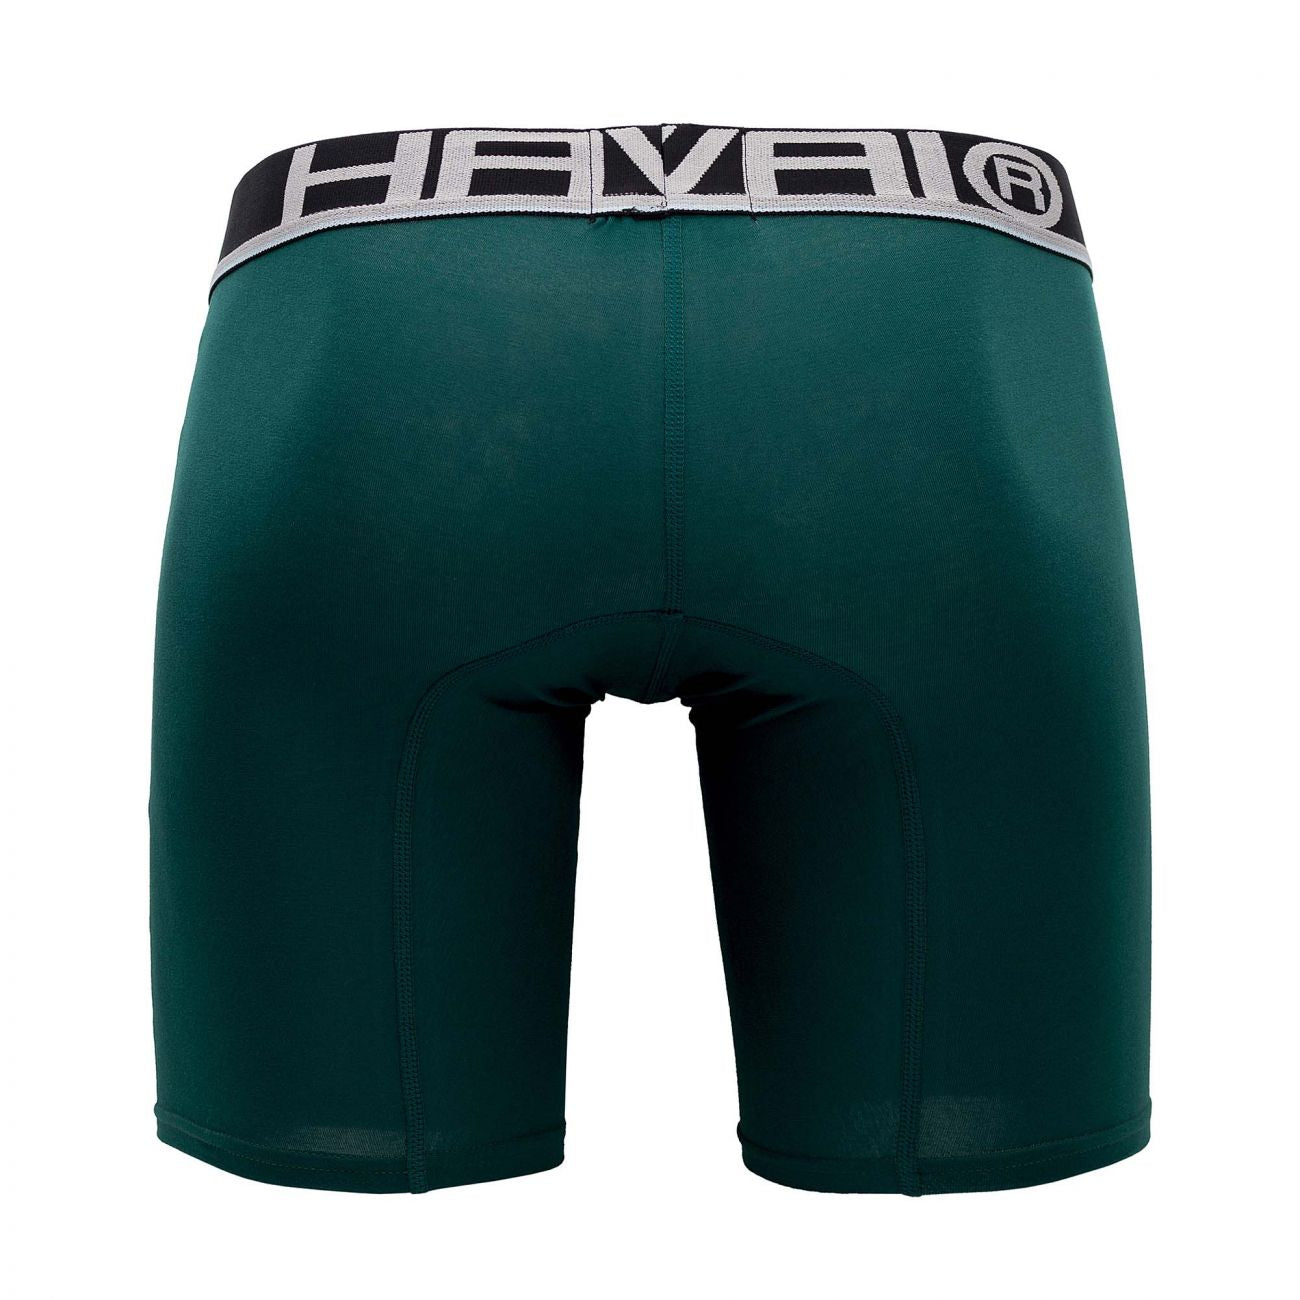 HAWAI 41903 Solid Athletic Boxer Briefs Green